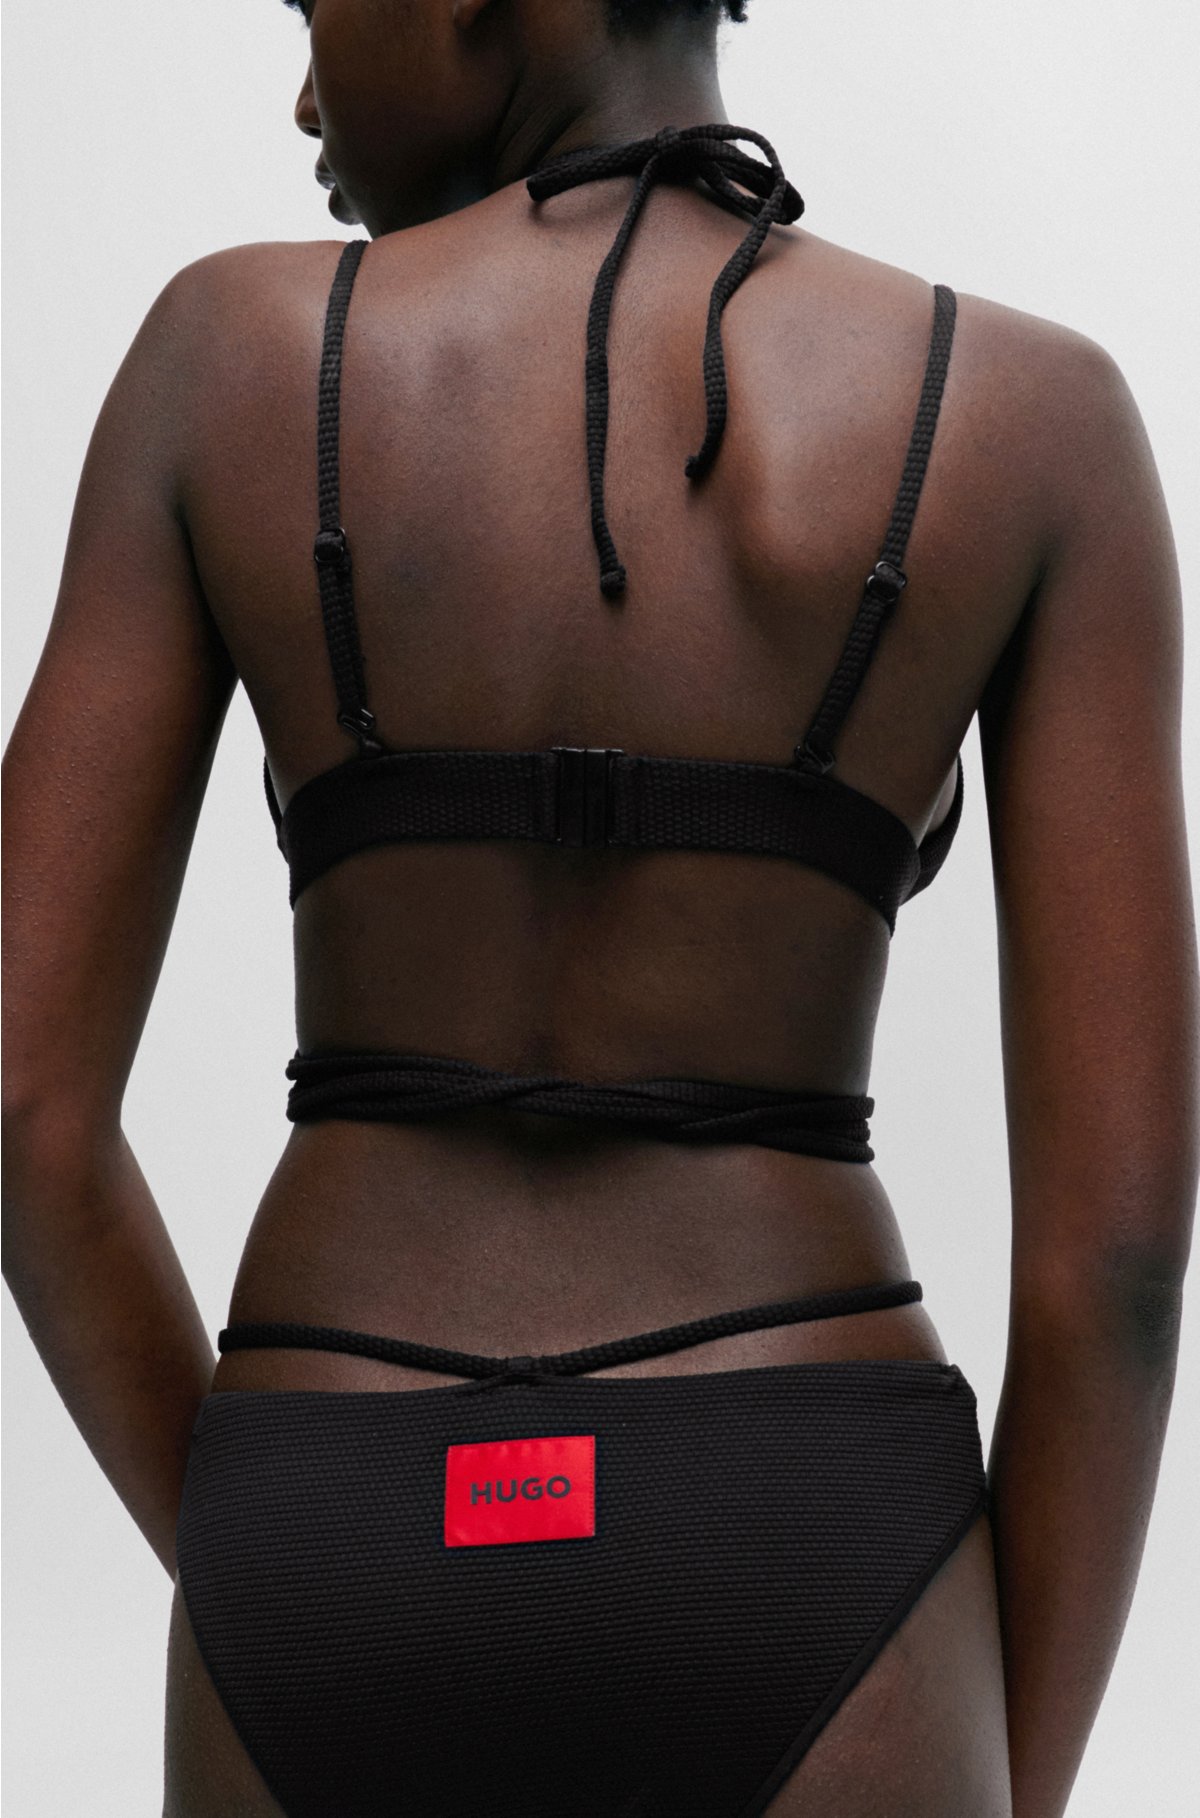 Structured-jersey bikini bottoms with strap details, Black